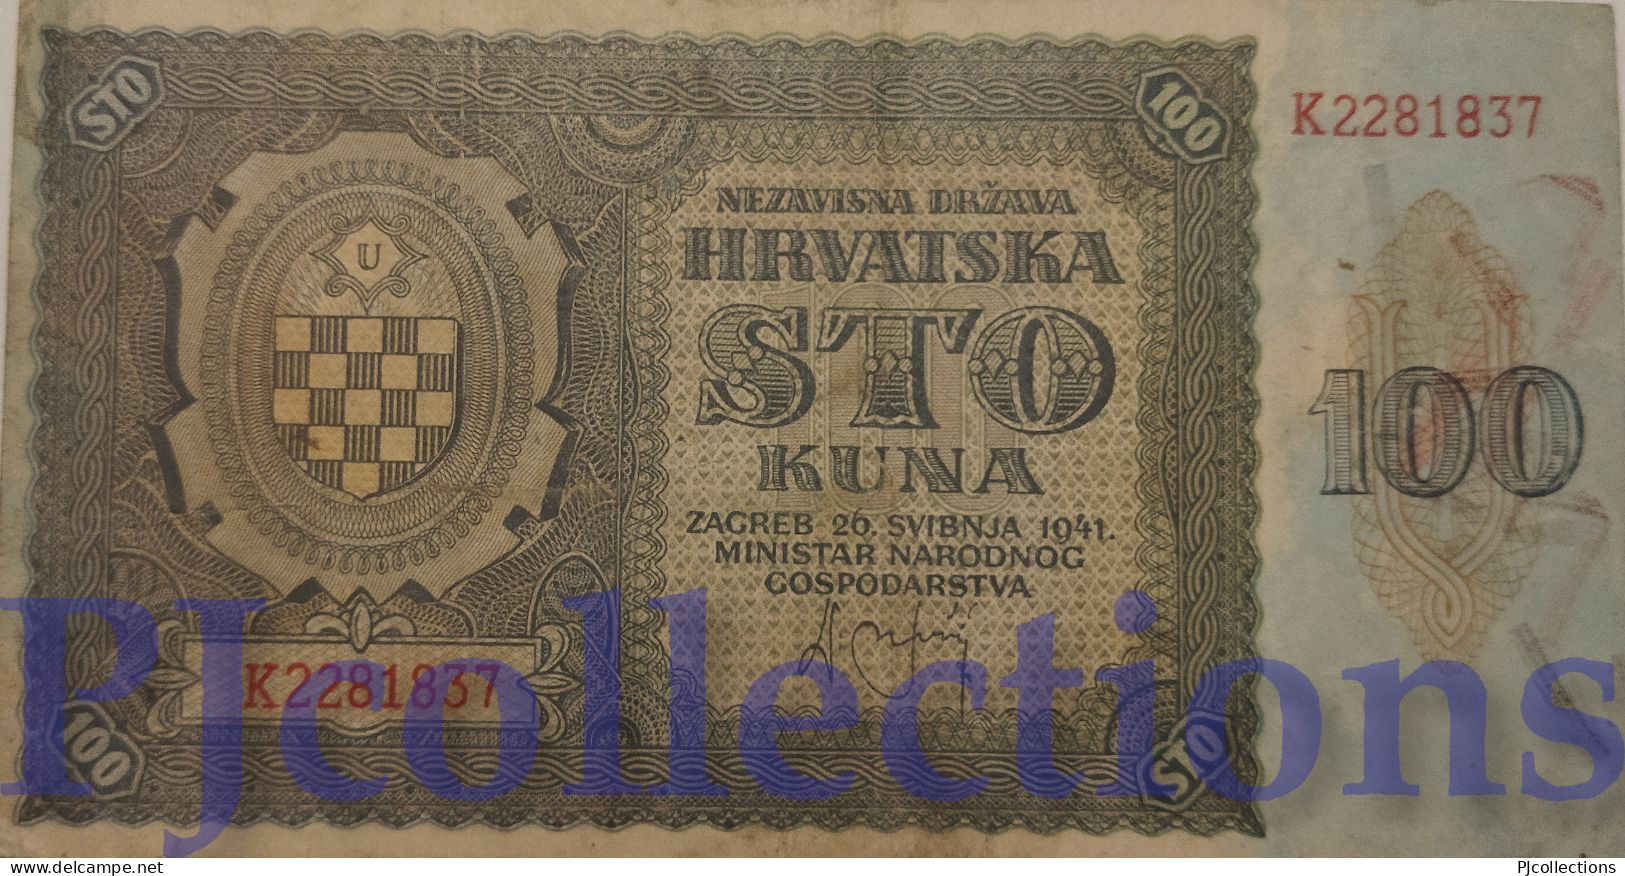 CROATIA 100 KUNA 1941 PICK 2a VF - Kroatien